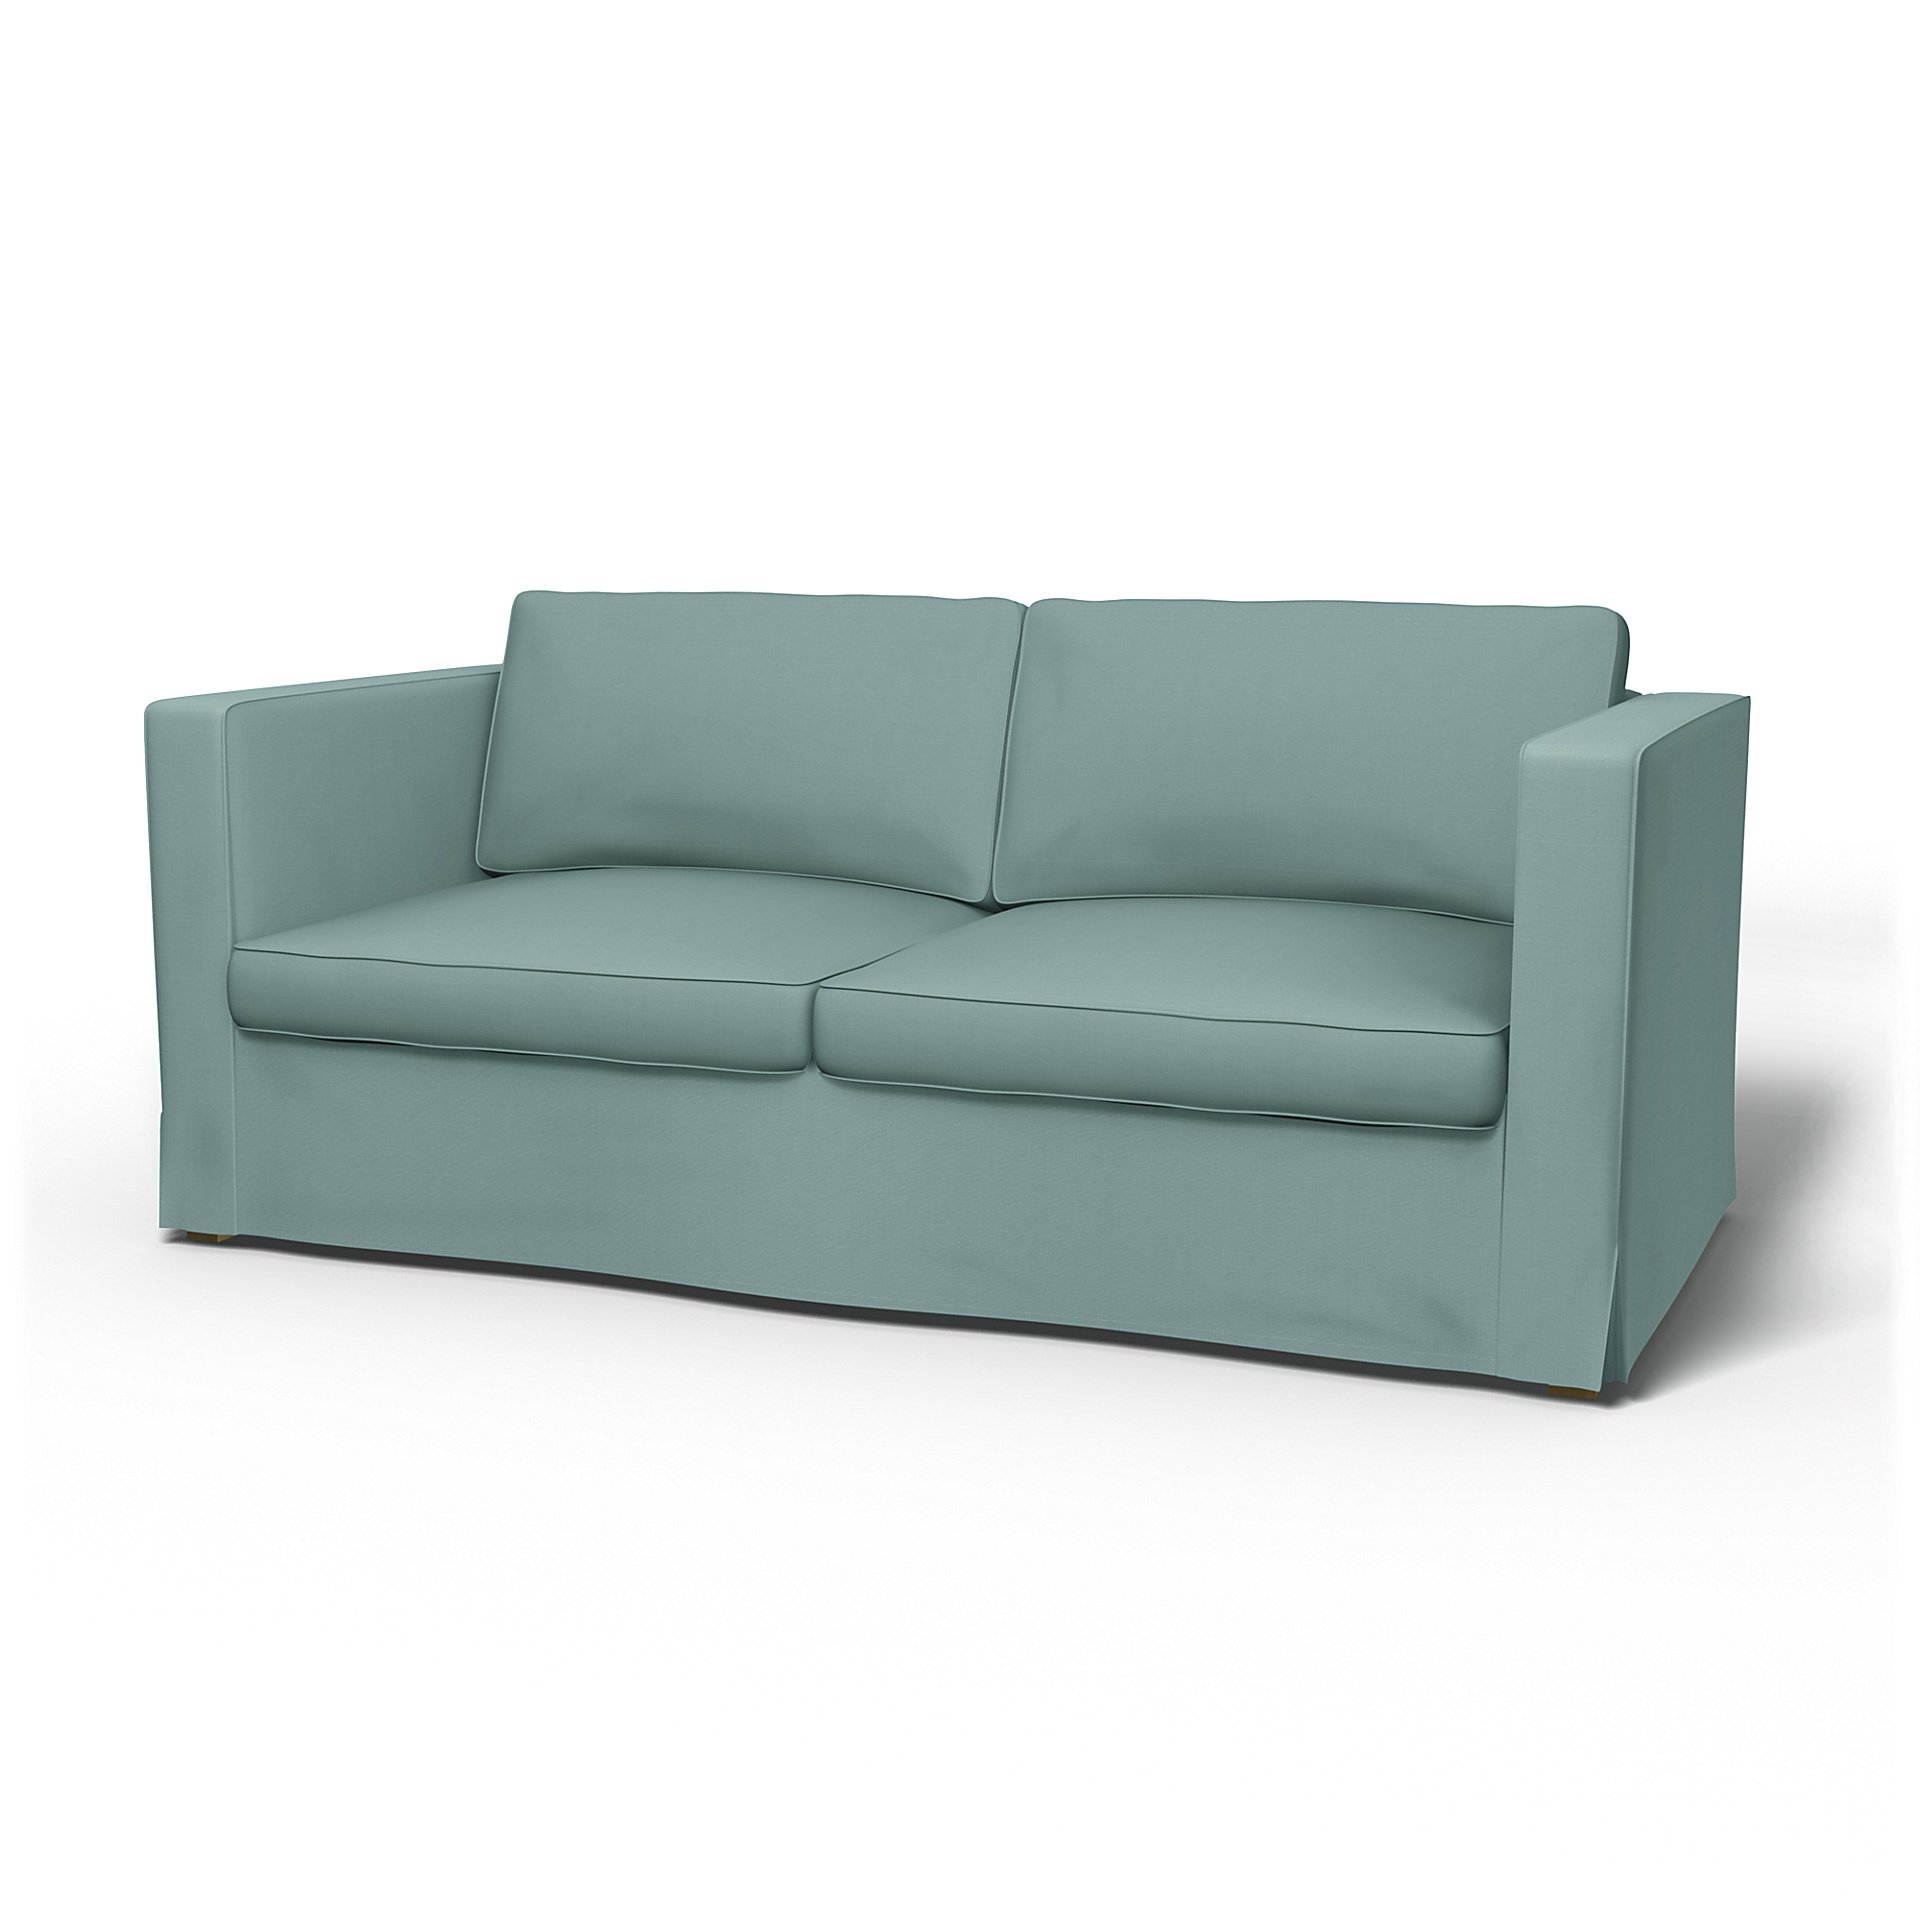 IKEA - Karlanda Sofa Bed Cover, Mineral Blue, Cotton - Bemz